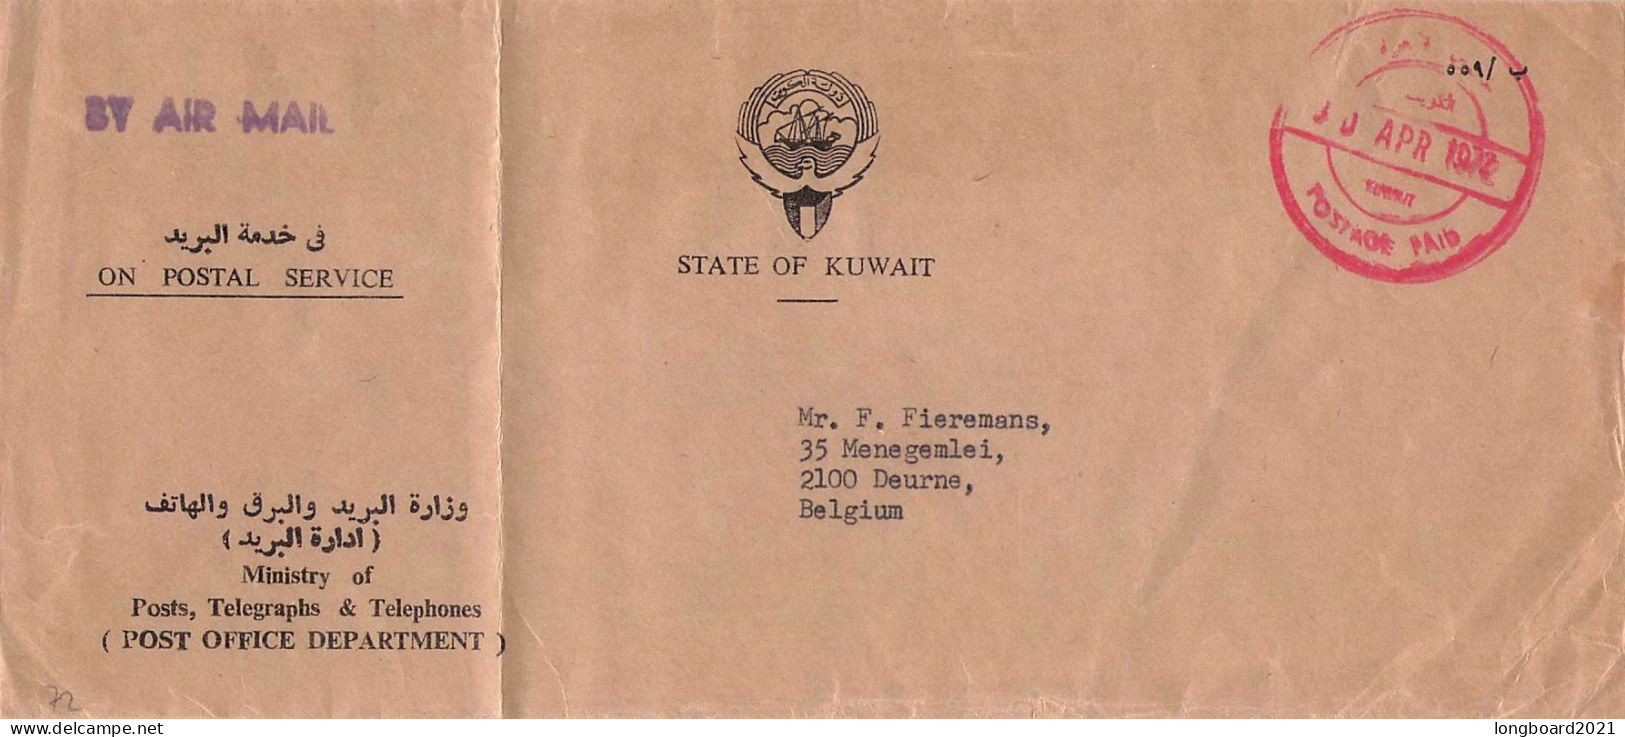 KUWAIT - ON POSTAL SERVICE 1972 - BELGIUM / 5131 - Koweït